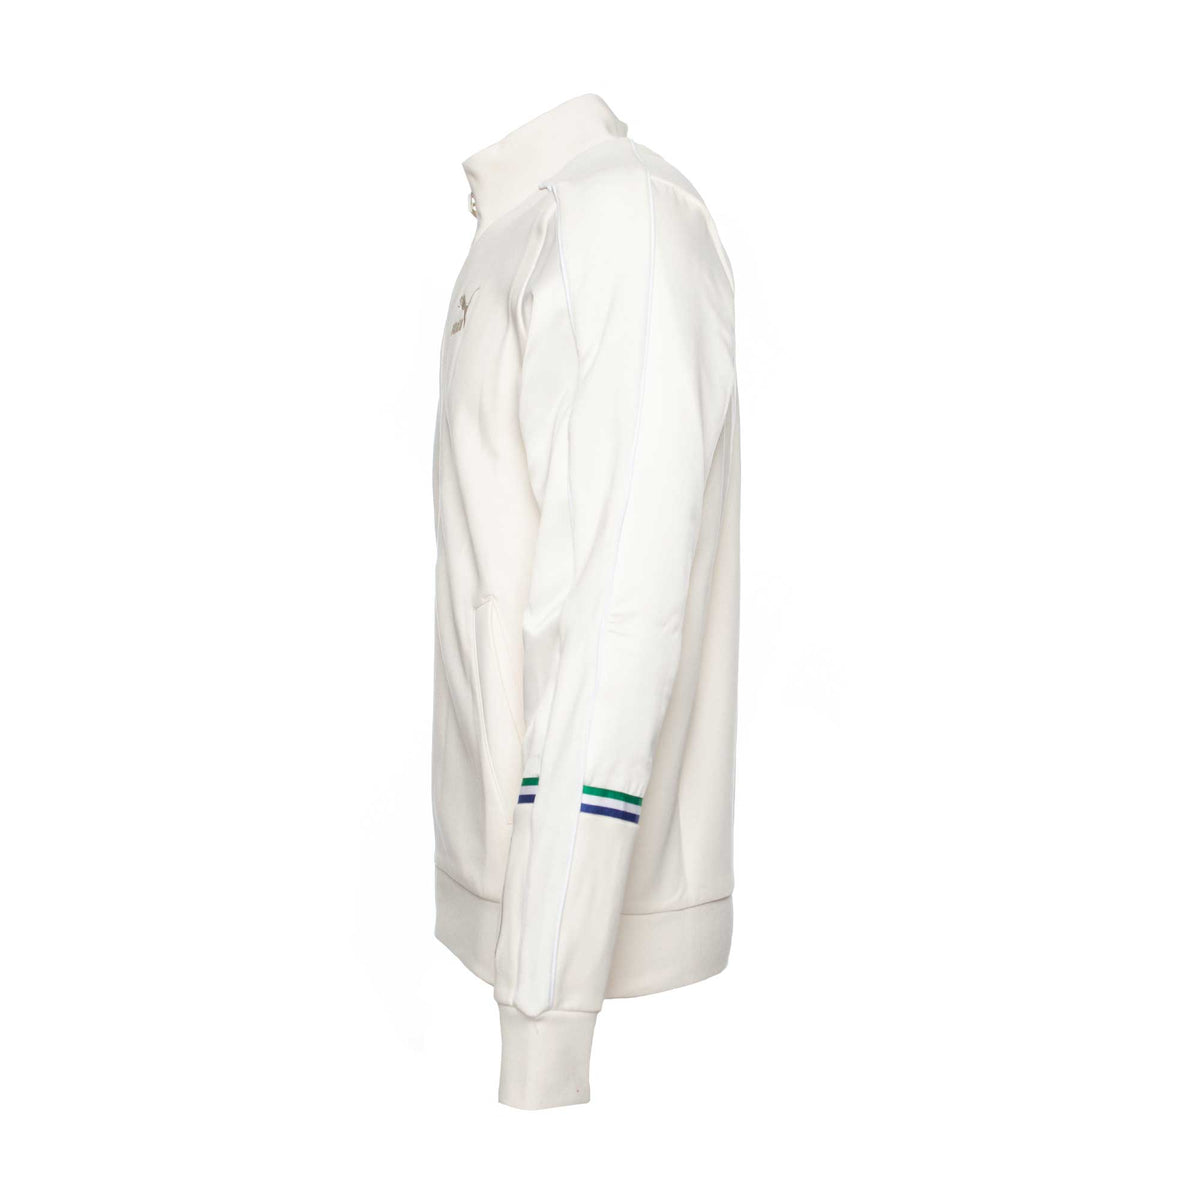  PUMA x BIG SEAN T7 track jacket Whisper White